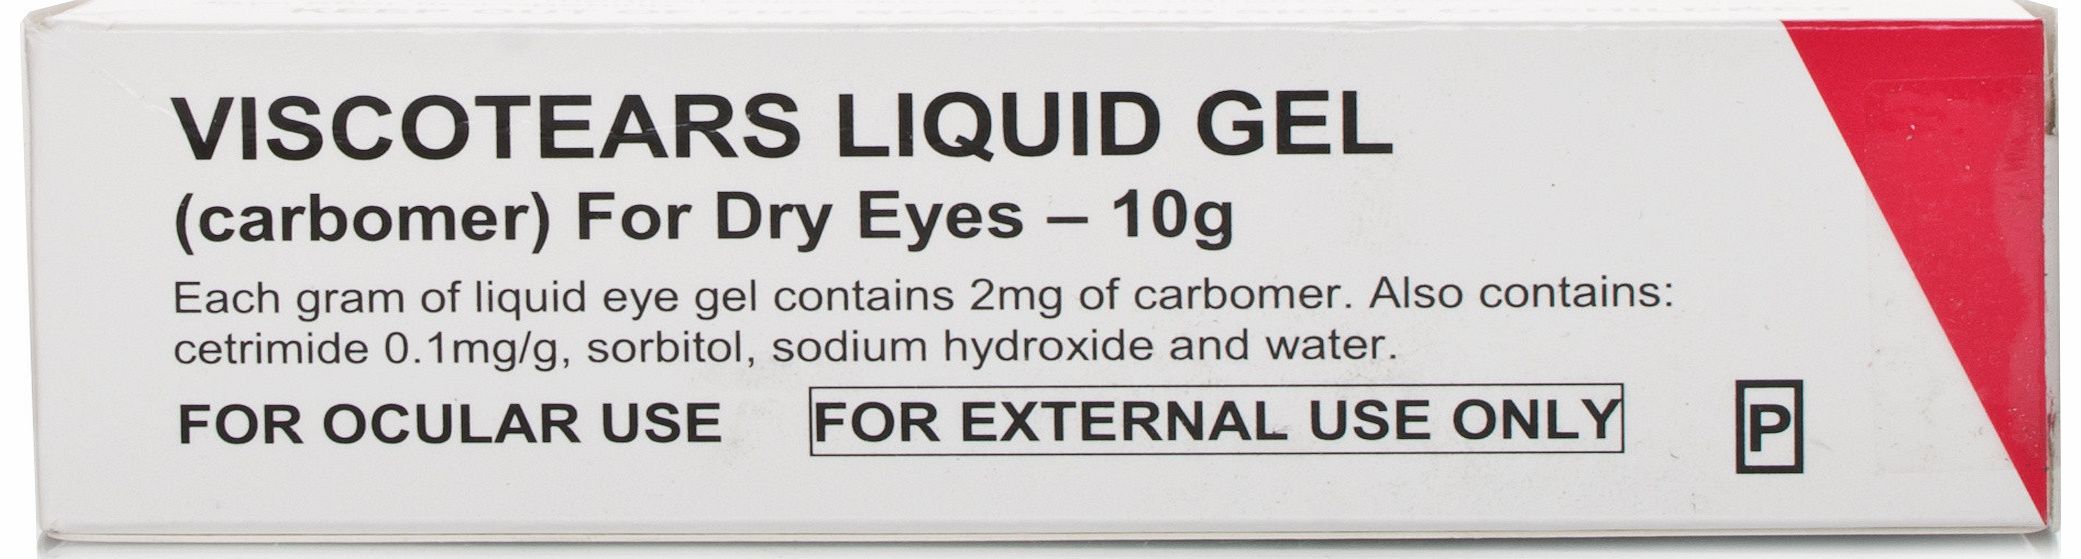 Gel For Dry Eye Treatment 10g